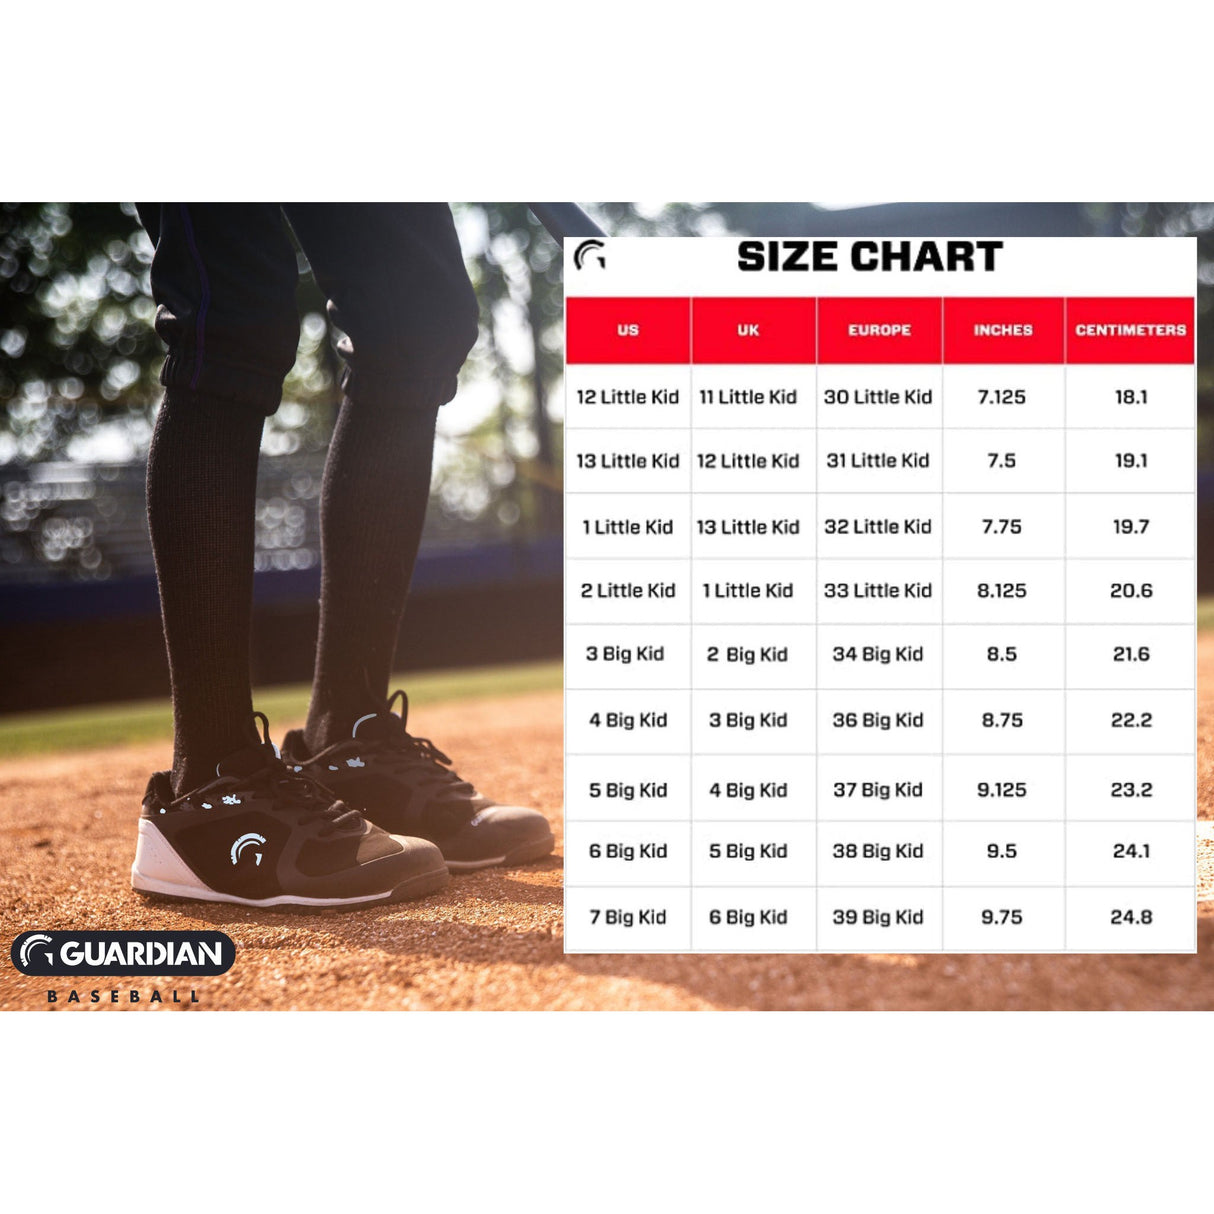 Guardian Baseball-Baseball Cleats-Guardian Baseball